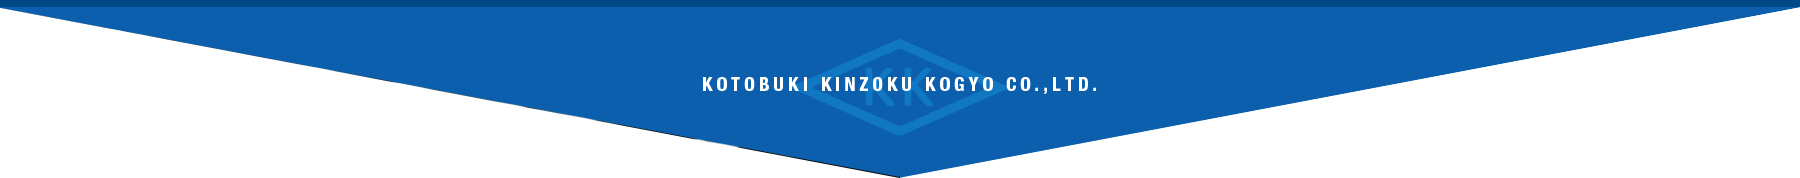 KOTOBUKI KINZOKU KOGYO CO.,LTD.